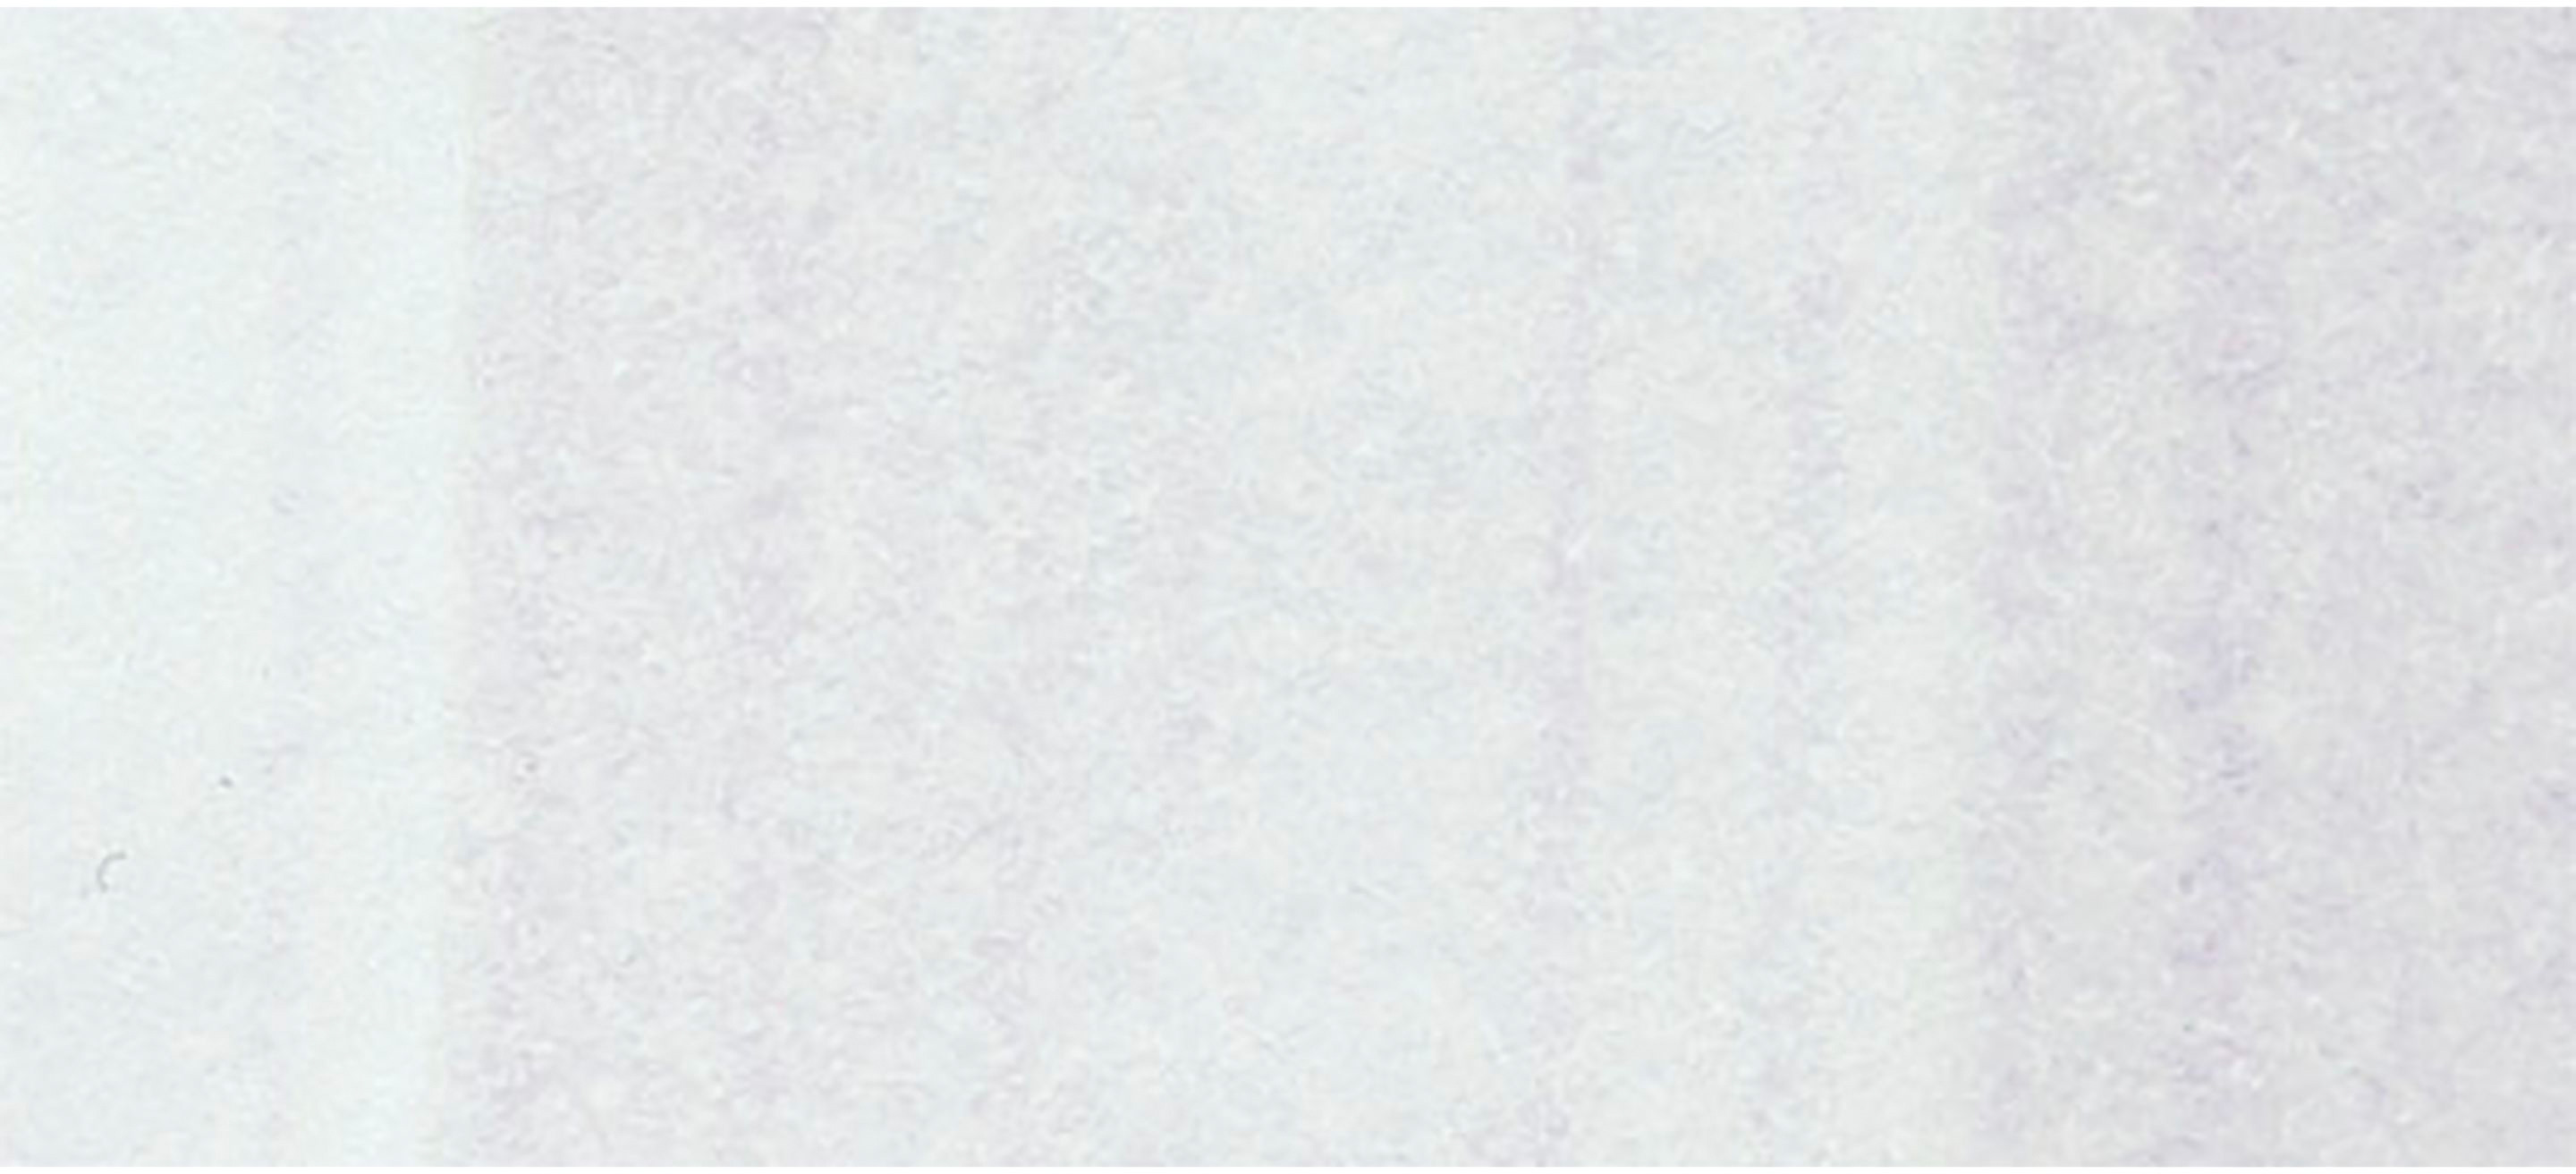 COPIC Marker Sketch 21075310 B91 - Pale Greyish Blue